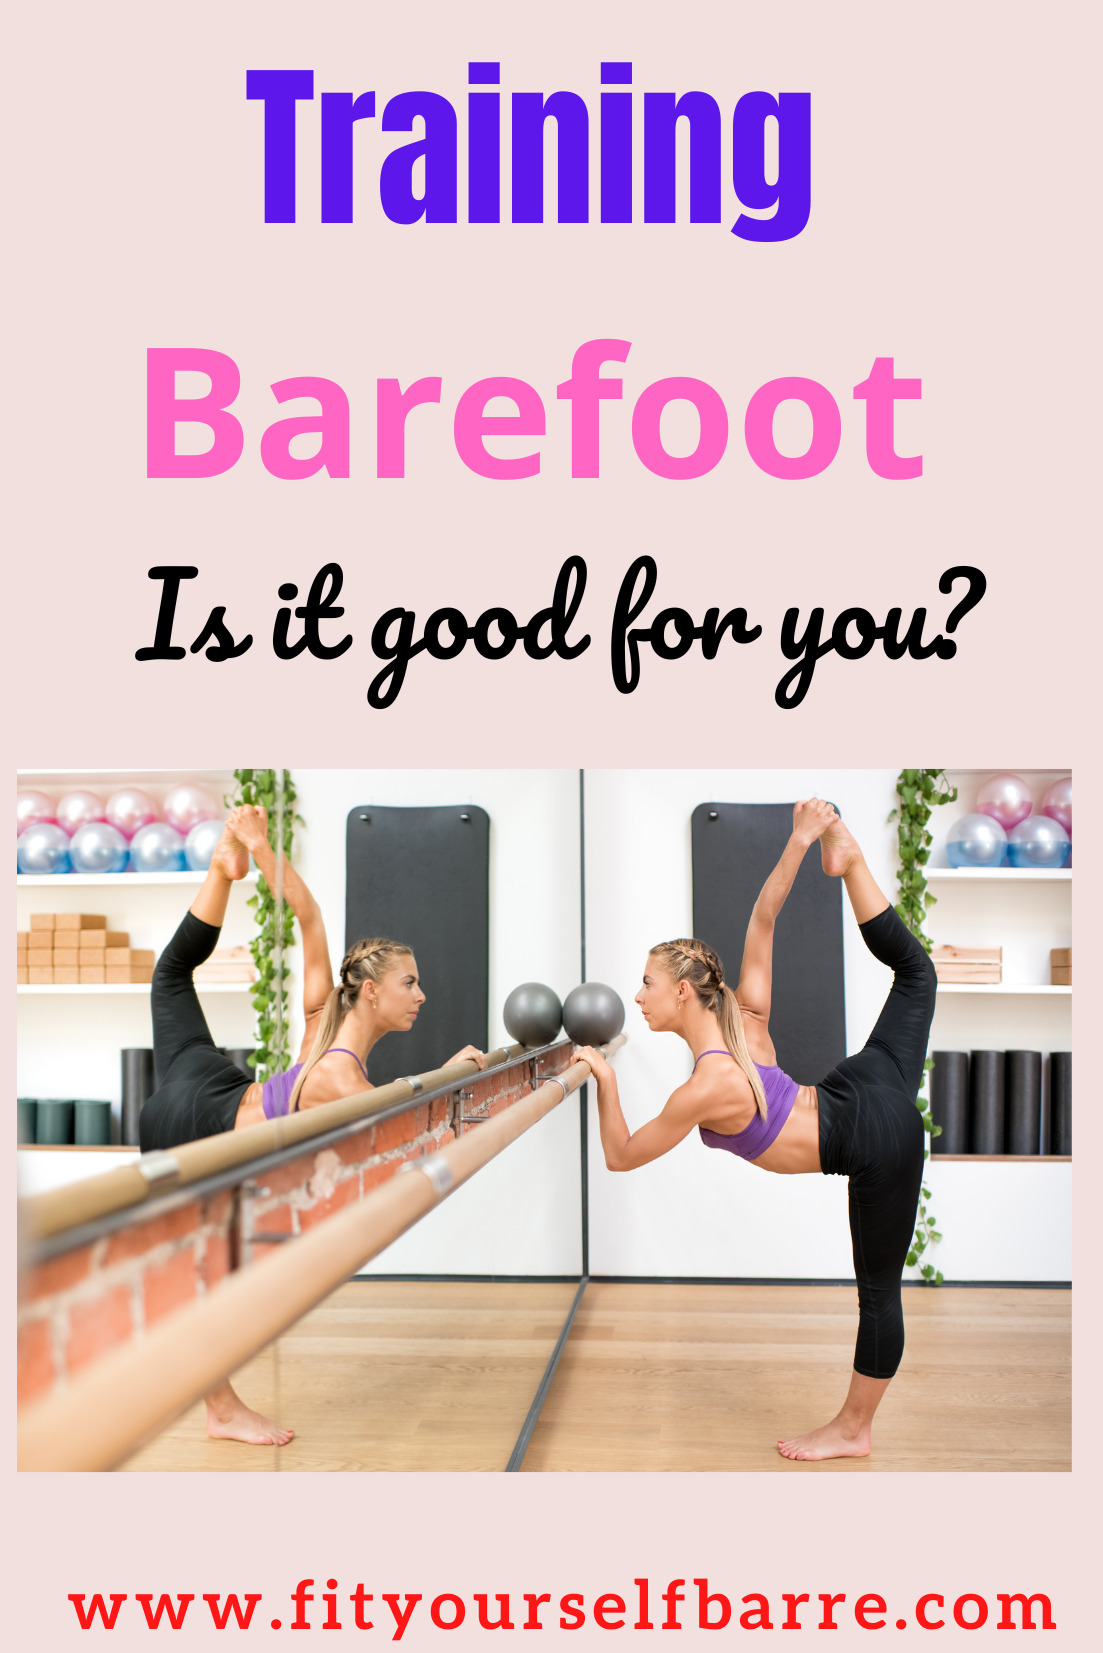 A-woman-training-barefoot